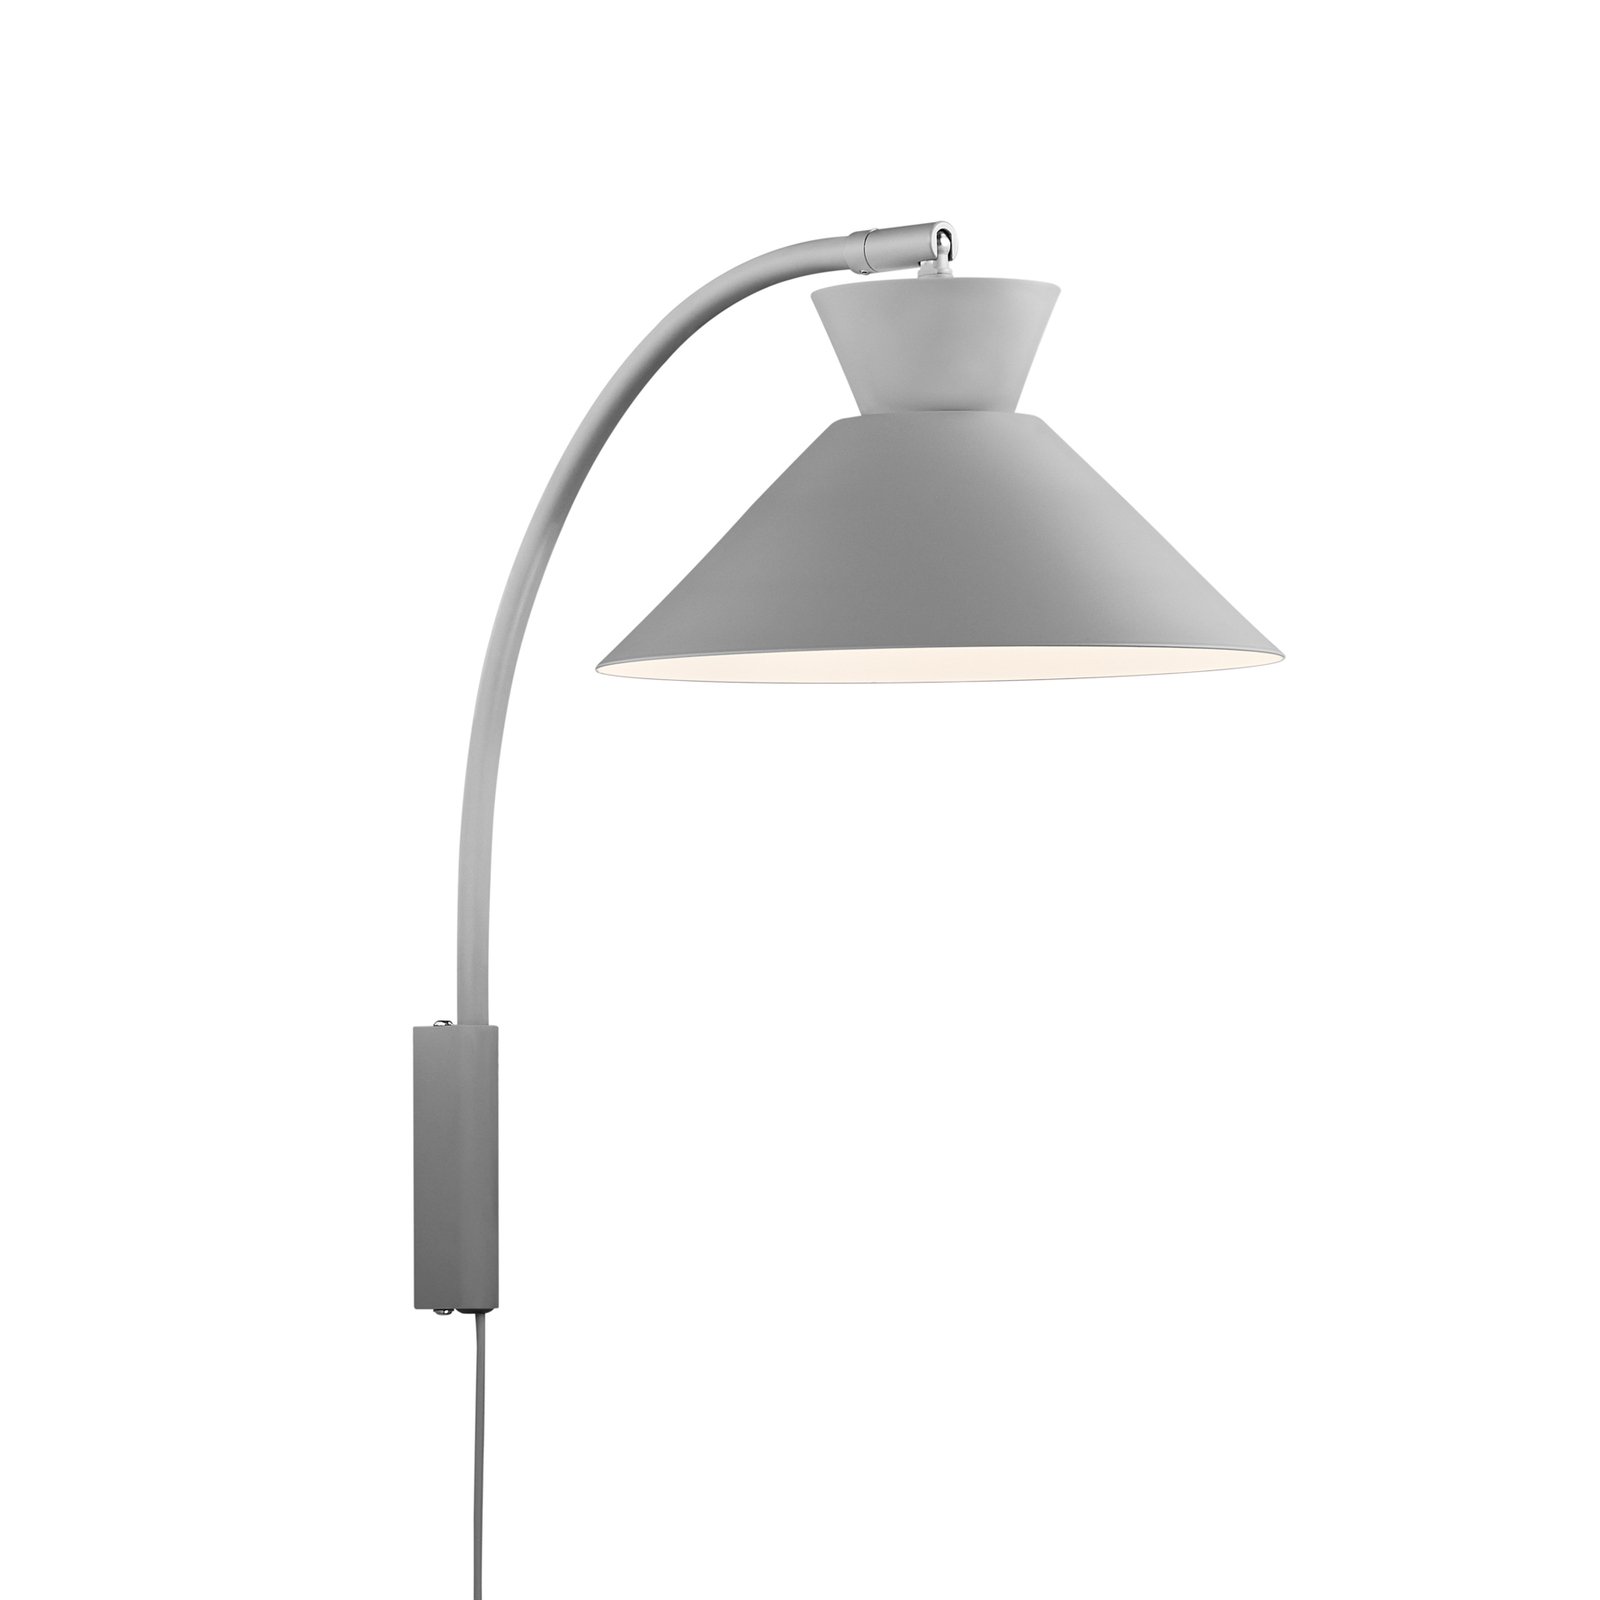 Wall light Dial, with plug, grey